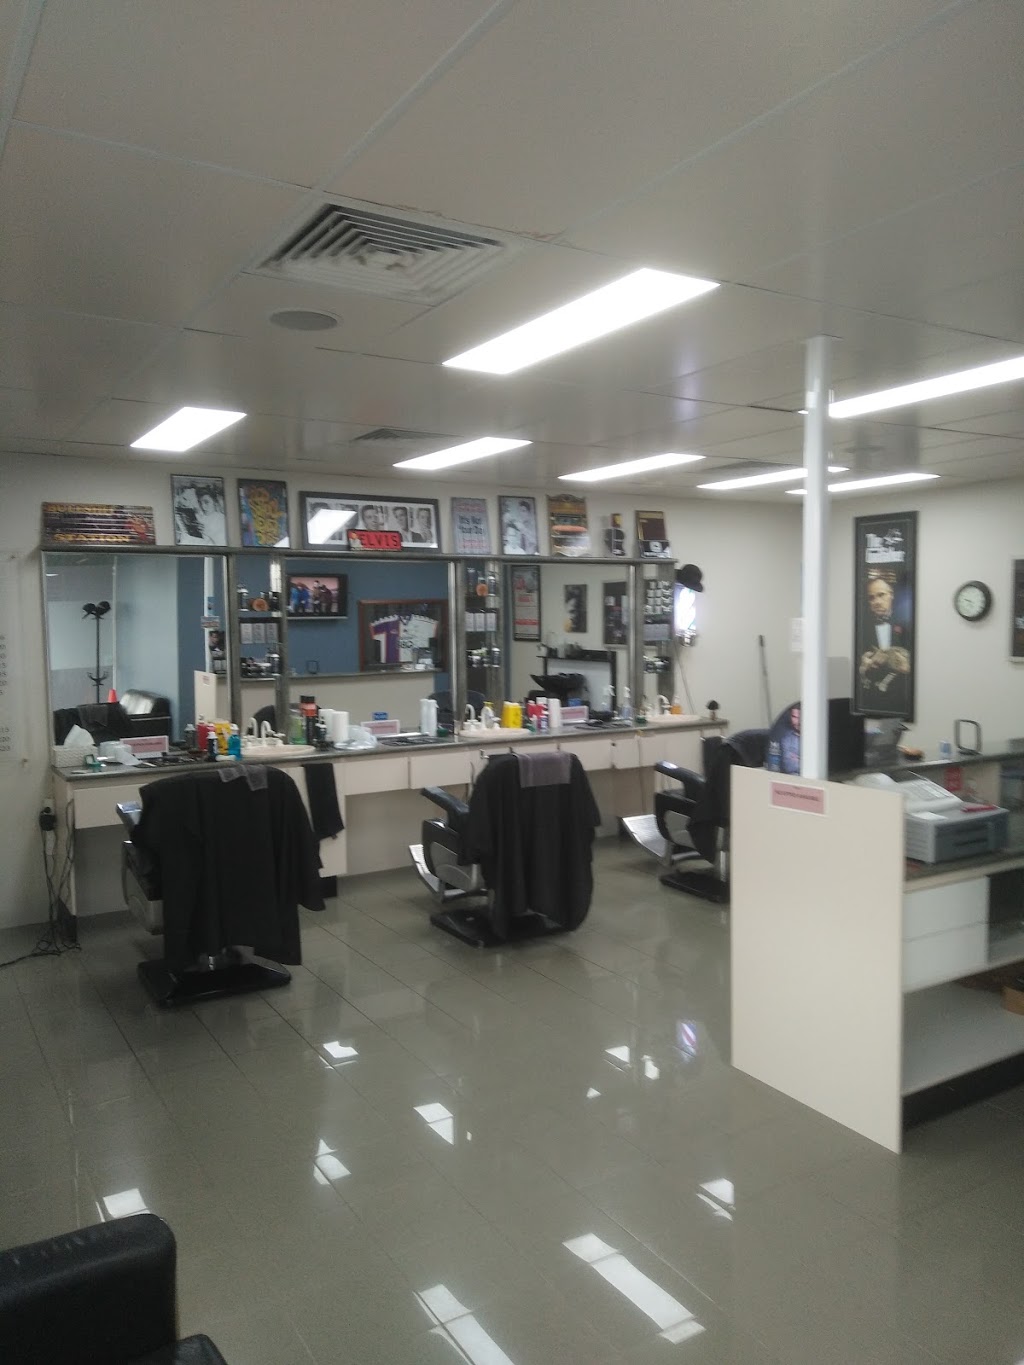 Masroni barber shop | hair care | 2/1892 Beach Rd, Malaga WA 6090, Australia | 0892496132 OR +61 8 9249 6132